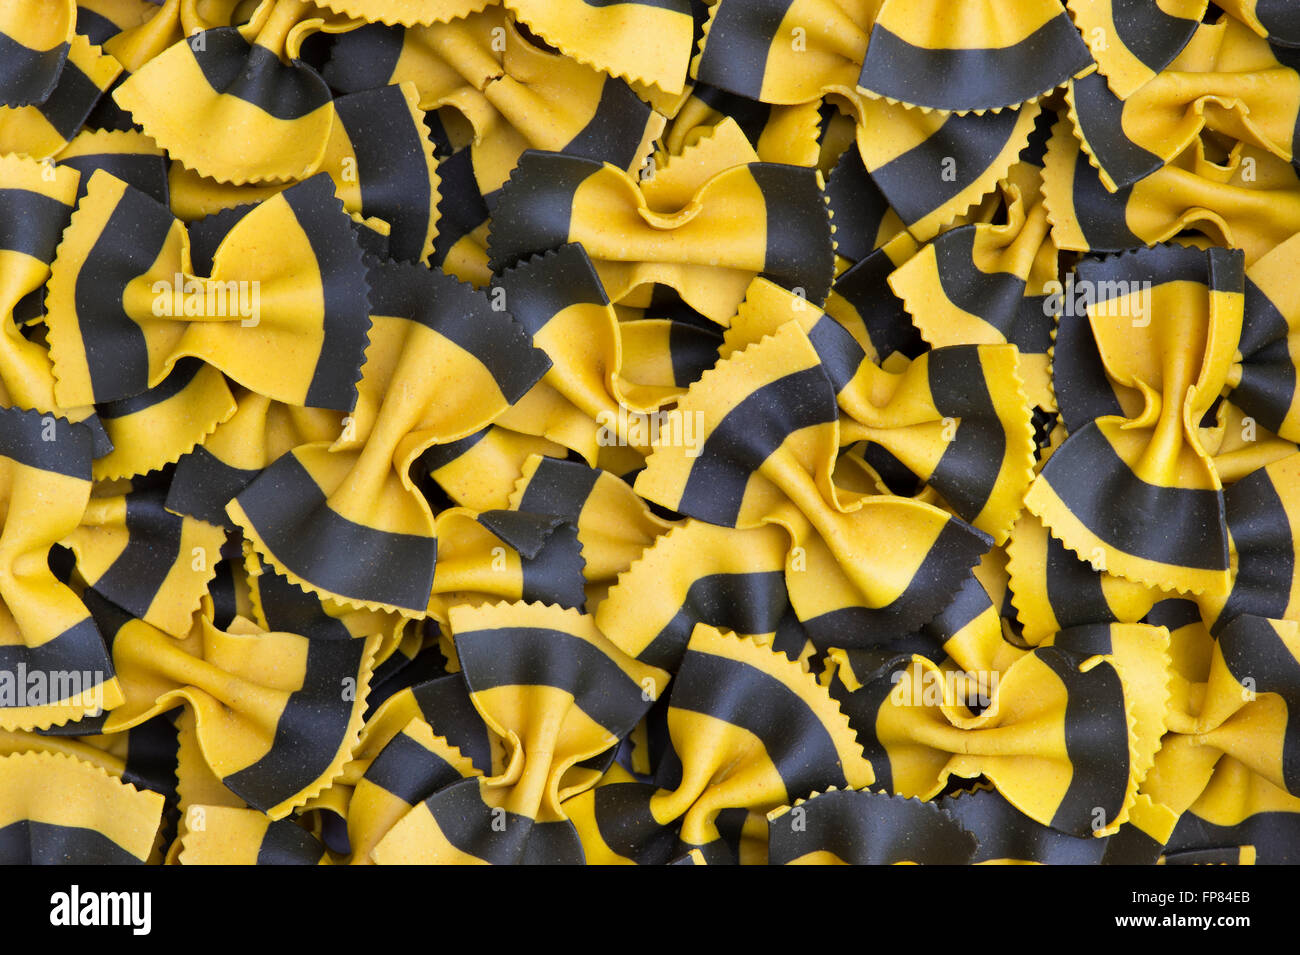 Butterfly Fantasia Yellow & Black. Farfalle pasta. Flavored coloured Pasta. Specialty pasta Stock Photo